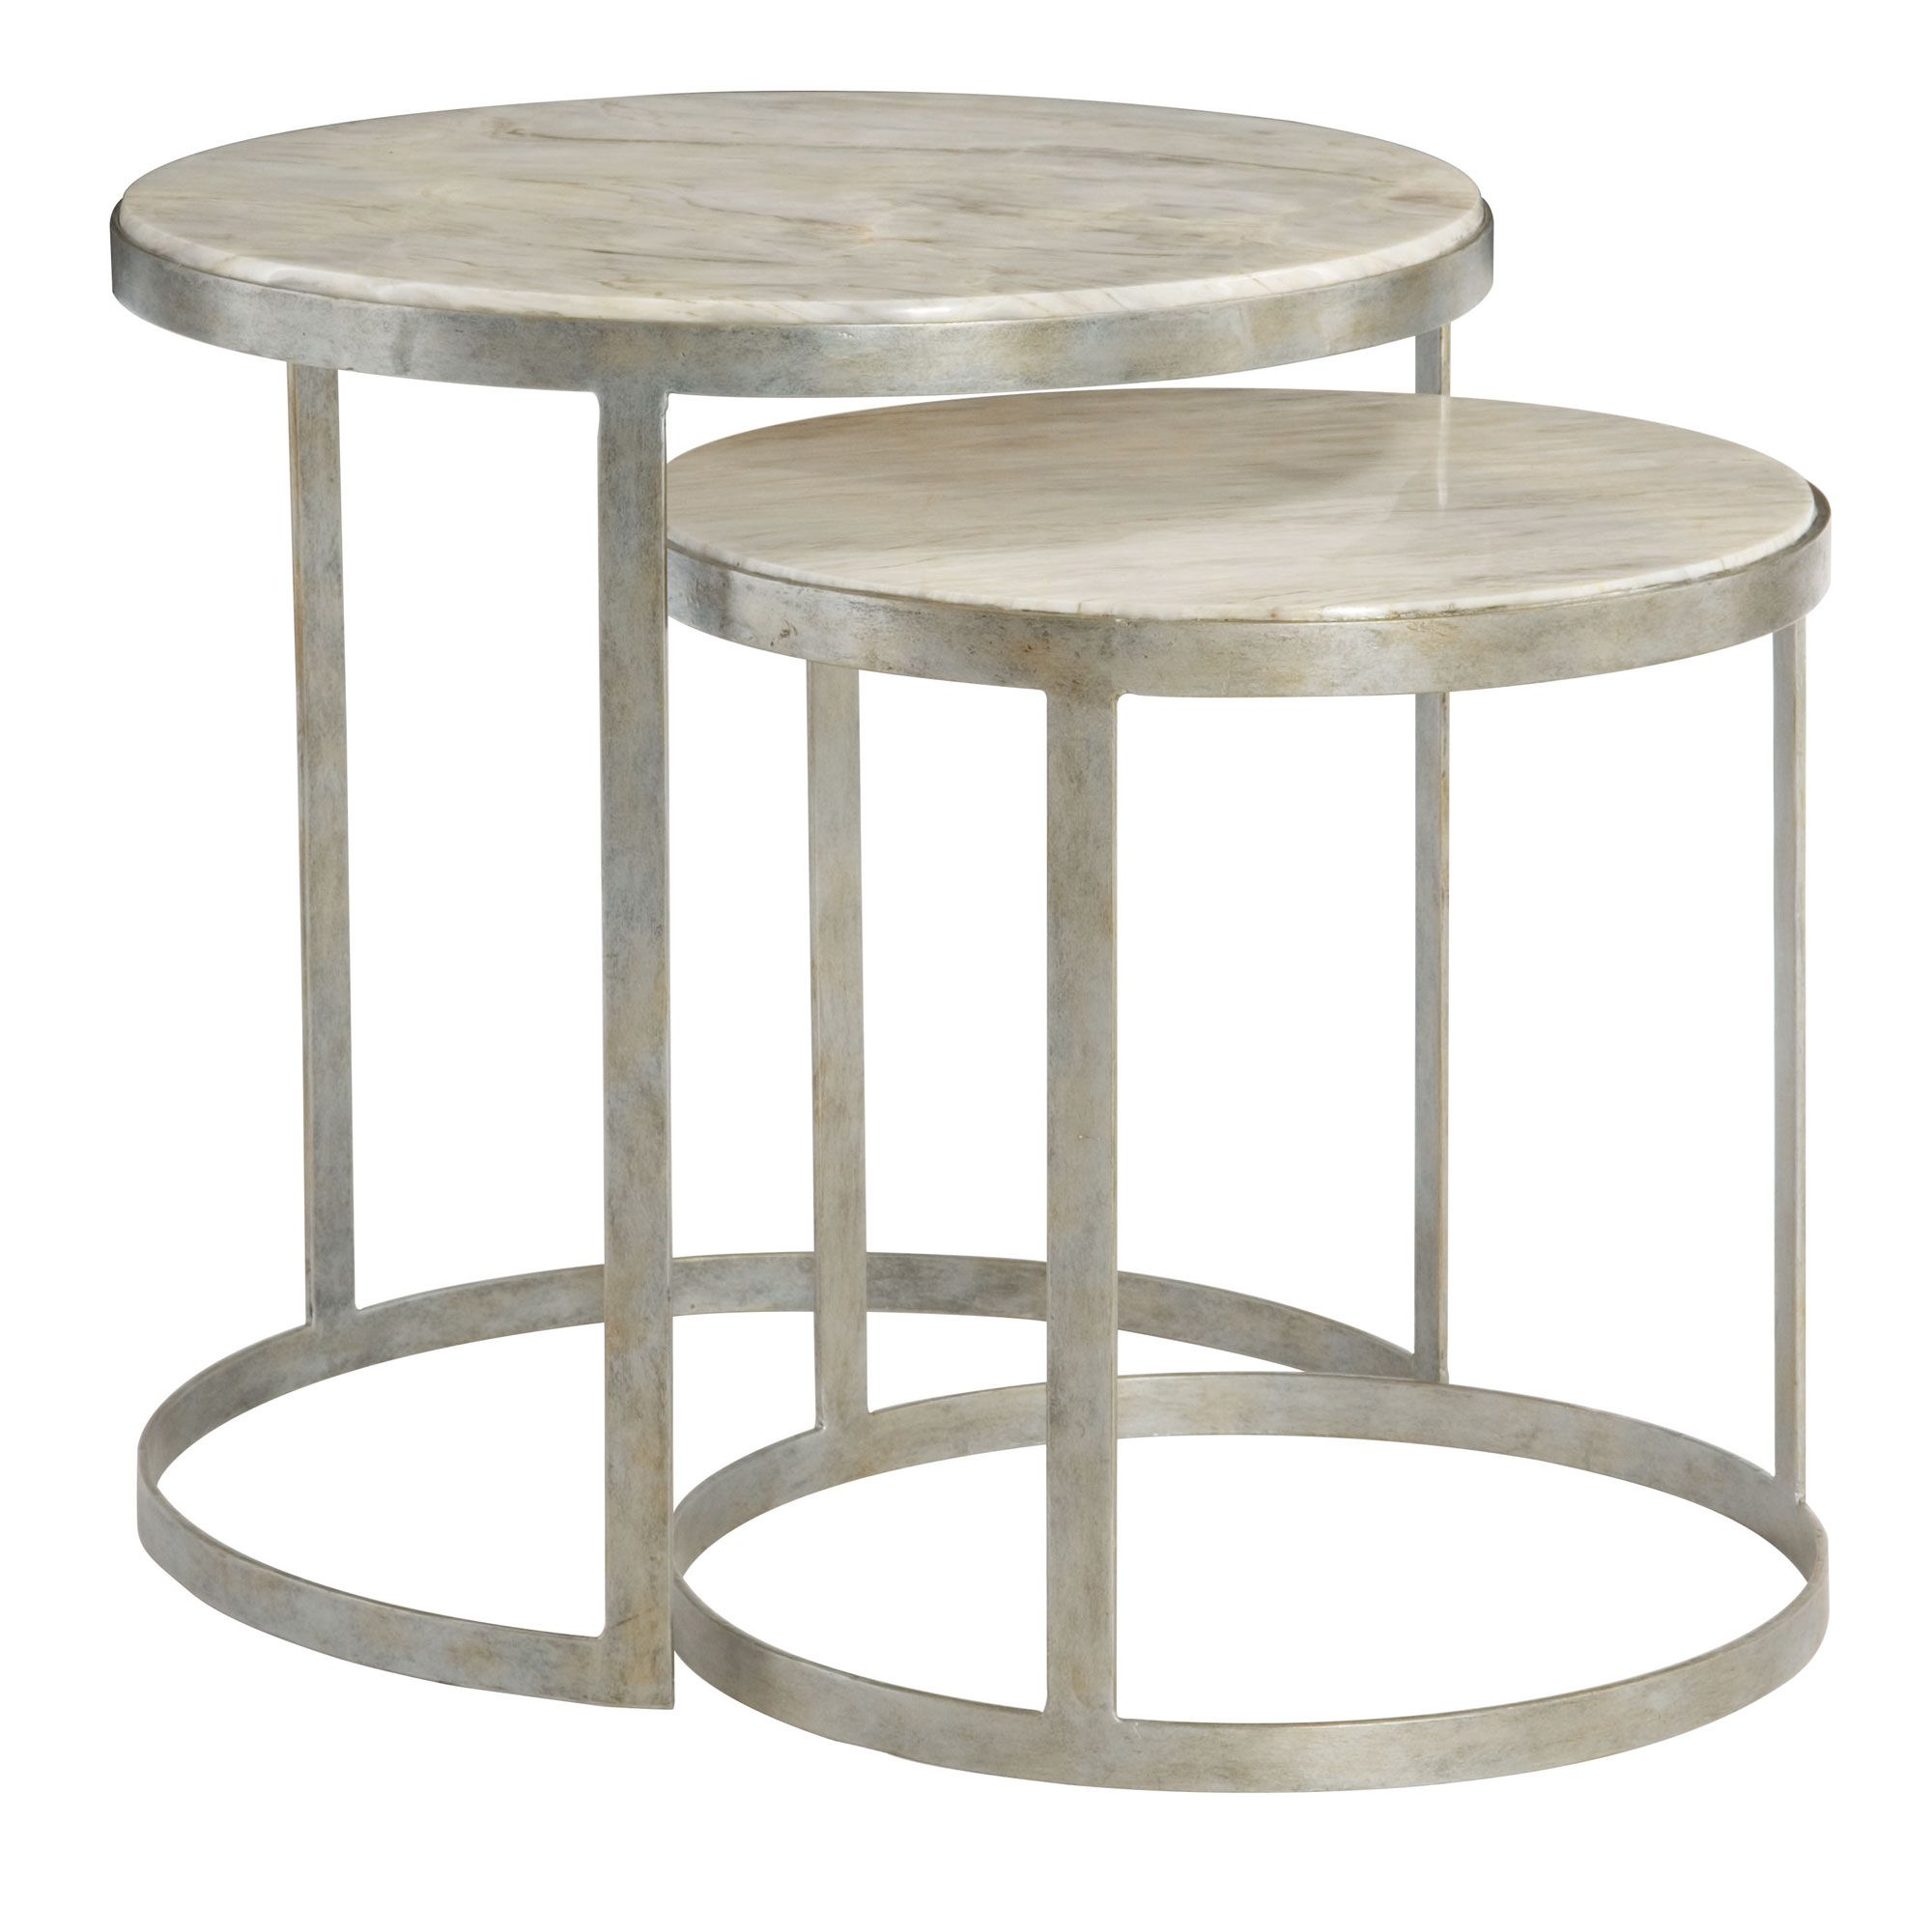 362-031 Tiffin Nesting Tables | Bernhardt Round Dia 24.5 H 24 Century Marble  Top #LightFinish $1665 #2Foot